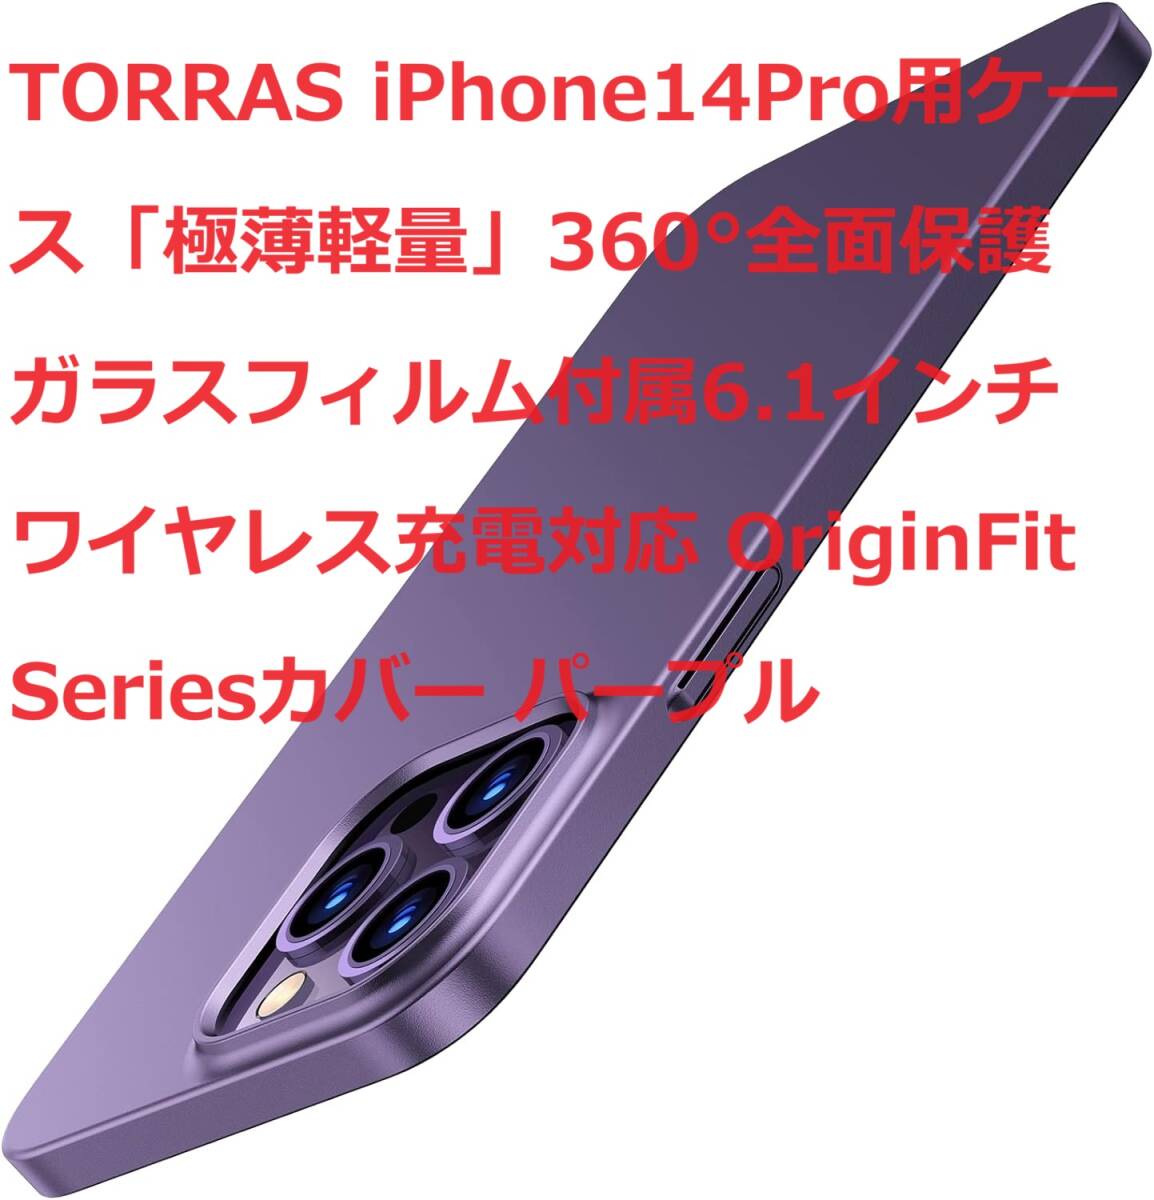 TORRAS iPhone14Pro用ケース「極薄軽量」360°全面保護ガラスフィルム付属6.1インチ ワイヤレス充電対応 OriginFit Seriesカバー パープル_画像1